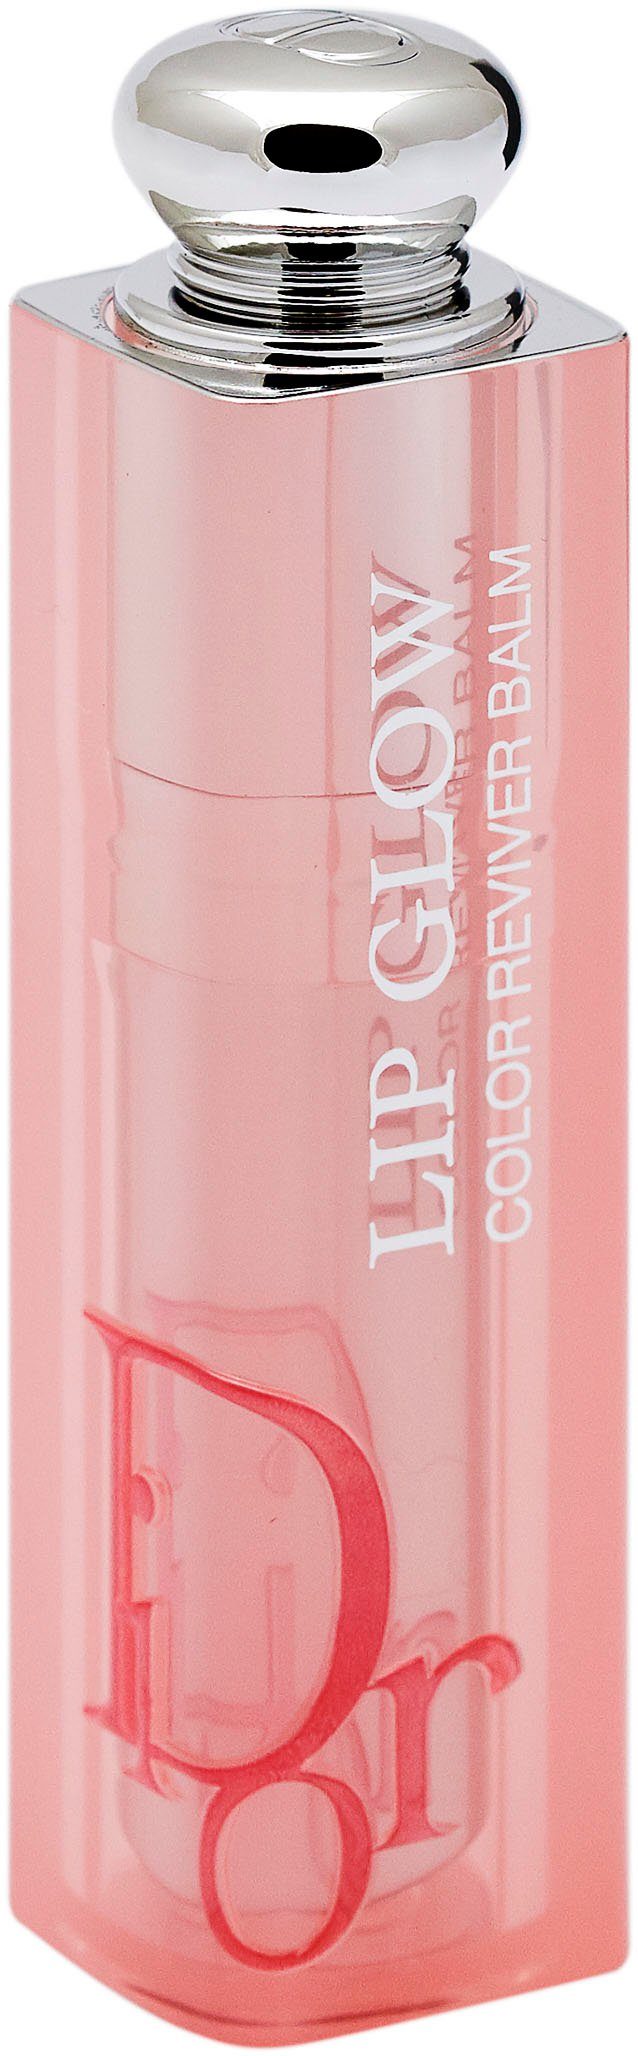 Dior Lippenbalsam Dior Addict Glow Lip 001 Pink